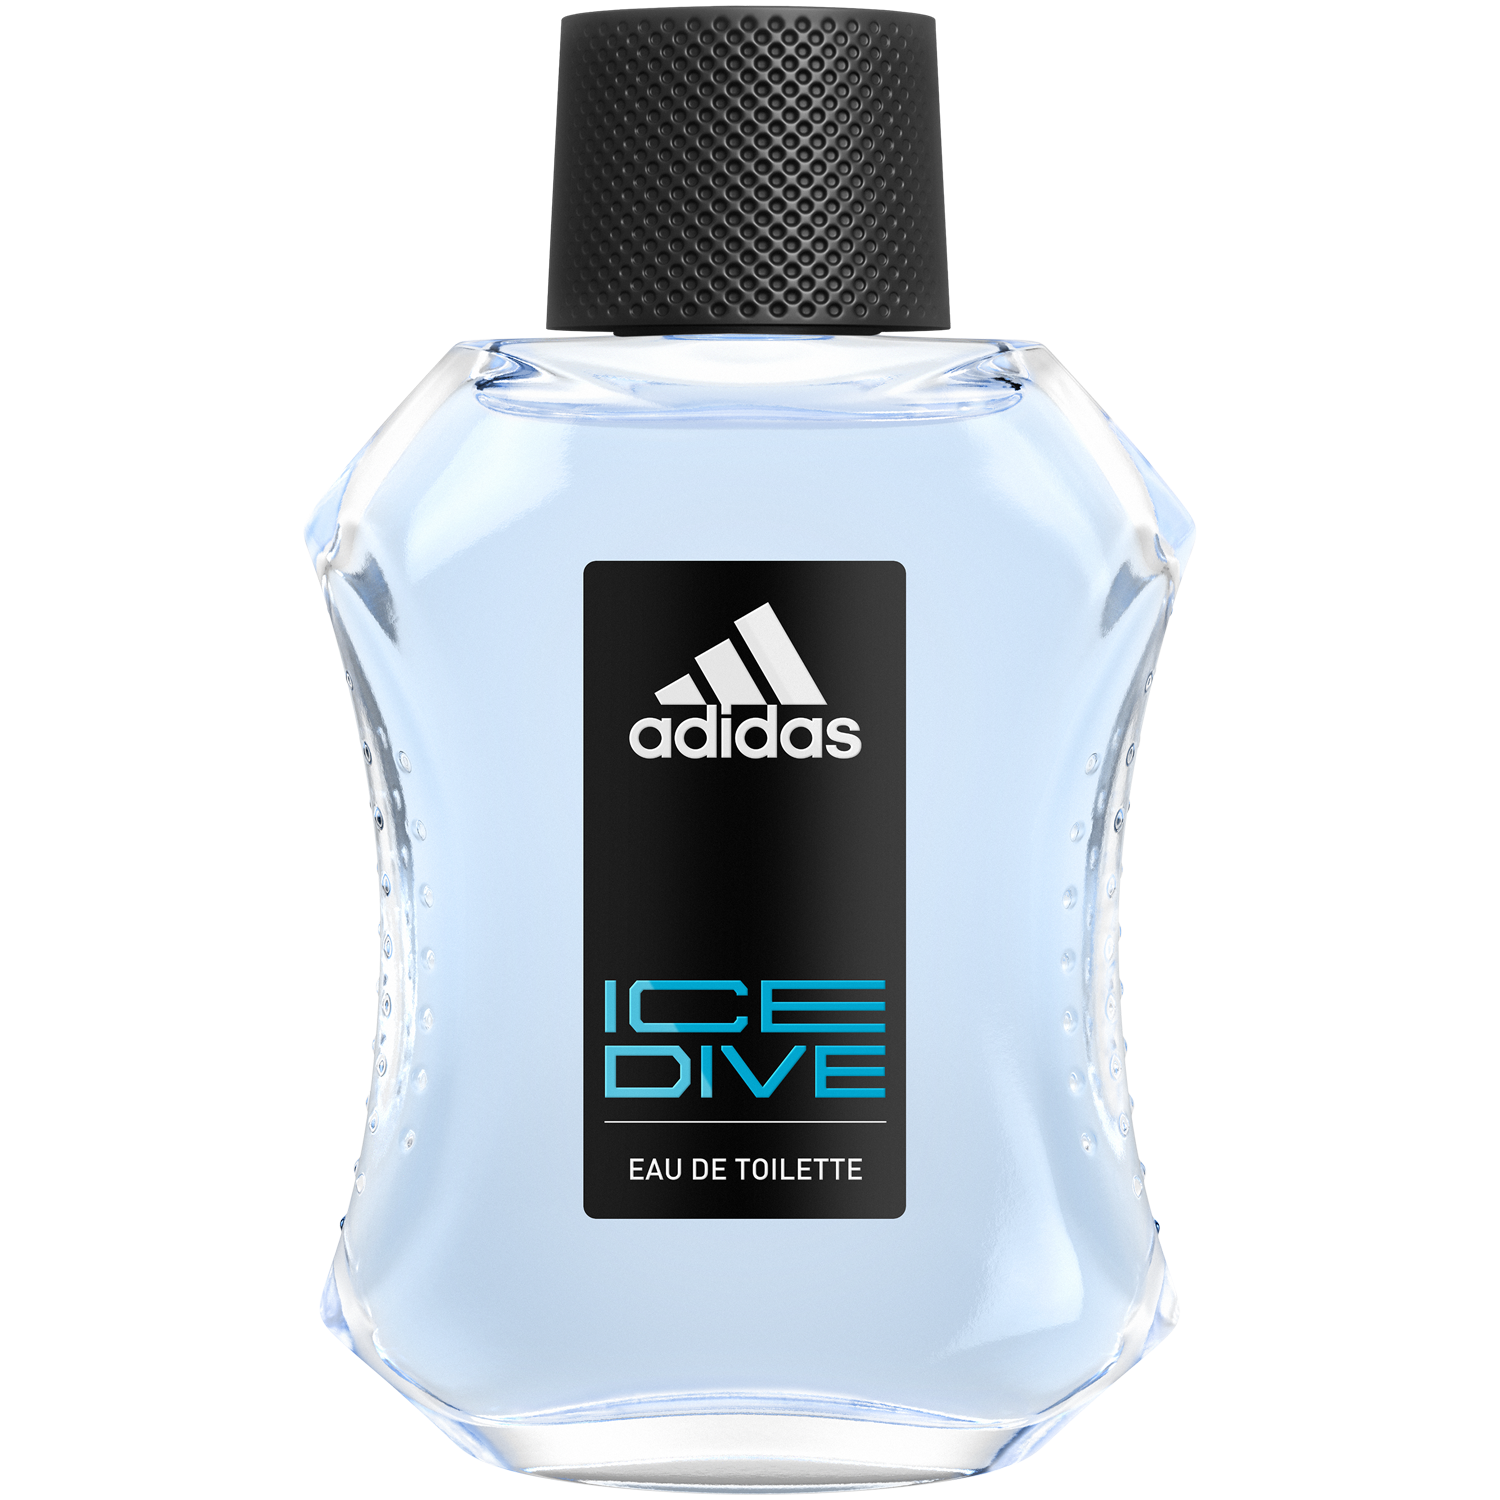 Adidas Ice Dive туалетная вода для мужчин, 100 мл adidas adidas дезодорант стик для мужчин ice dive